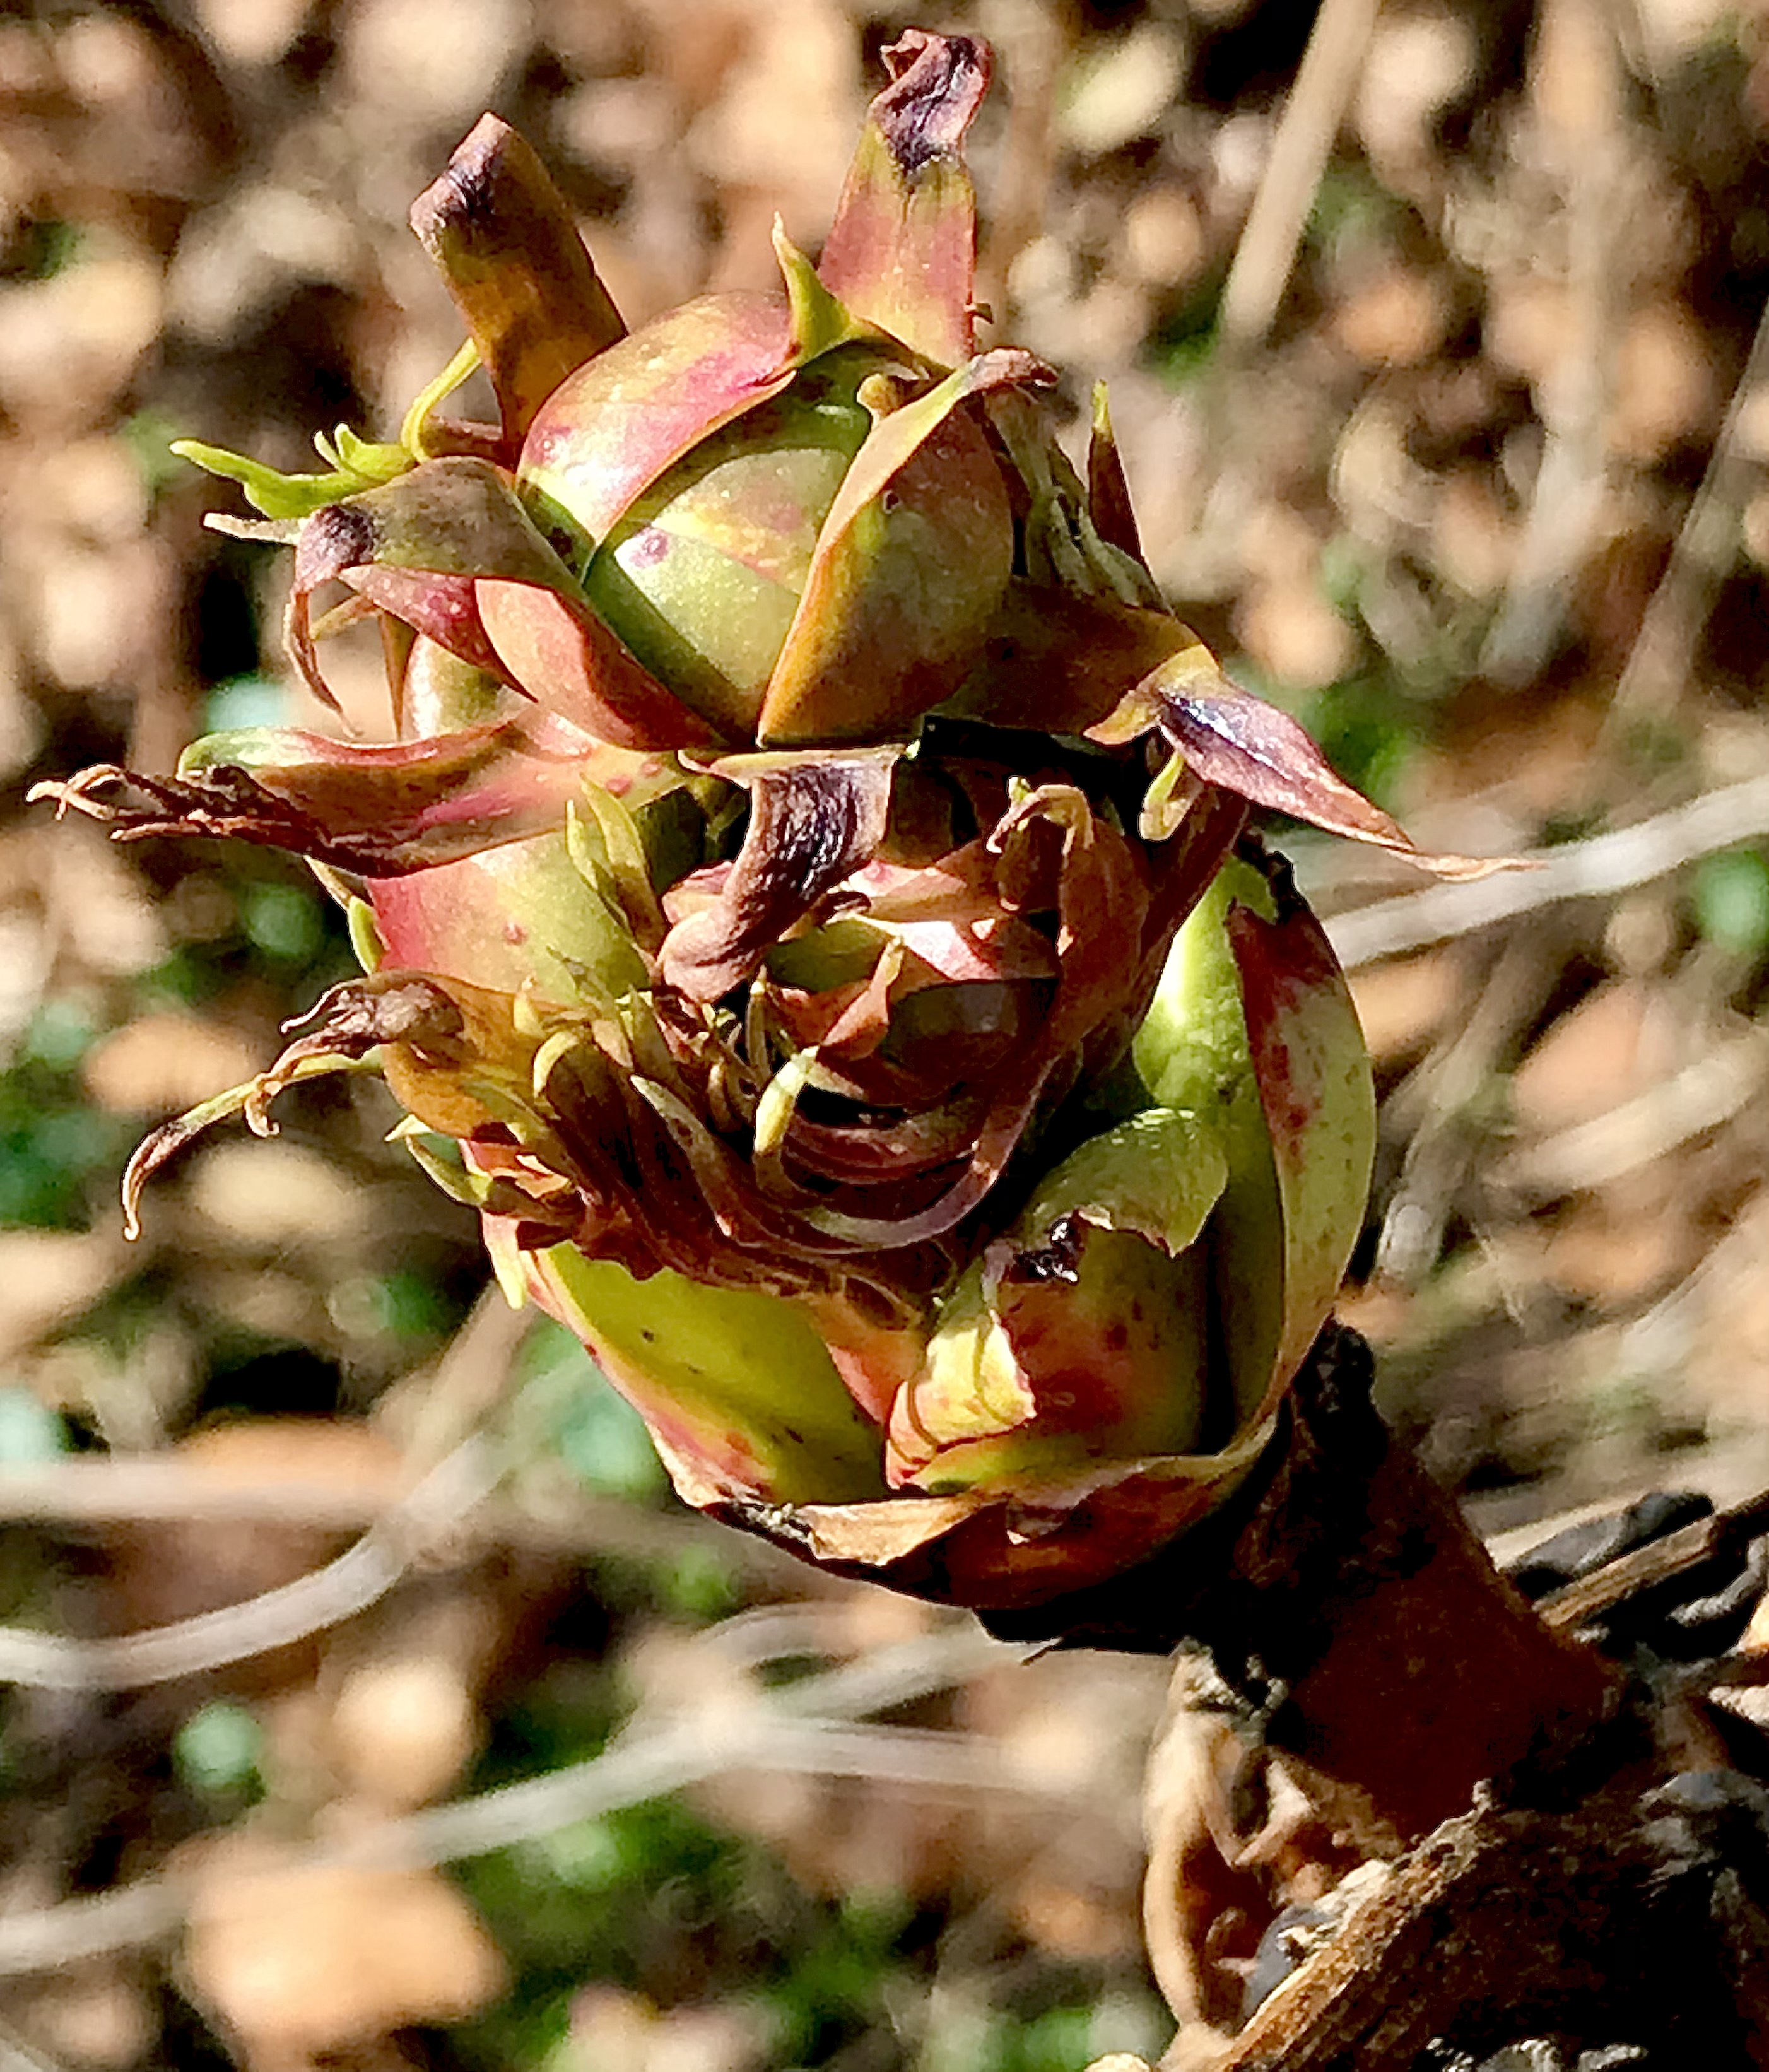 File:Flower Bud.JPG - Wikimedia Commons